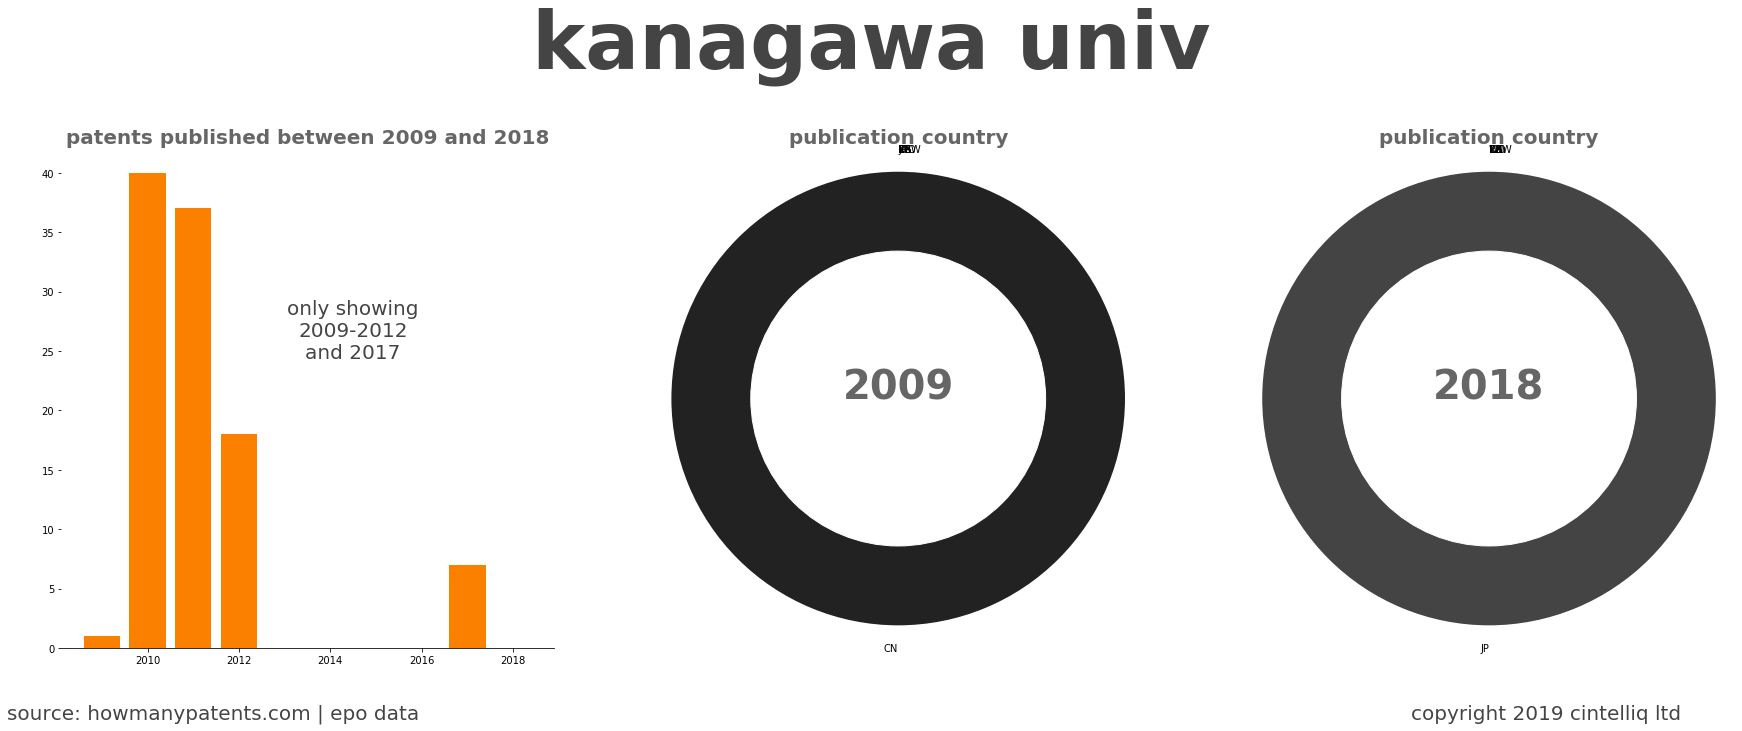 summary of patents for Kanagawa Univ